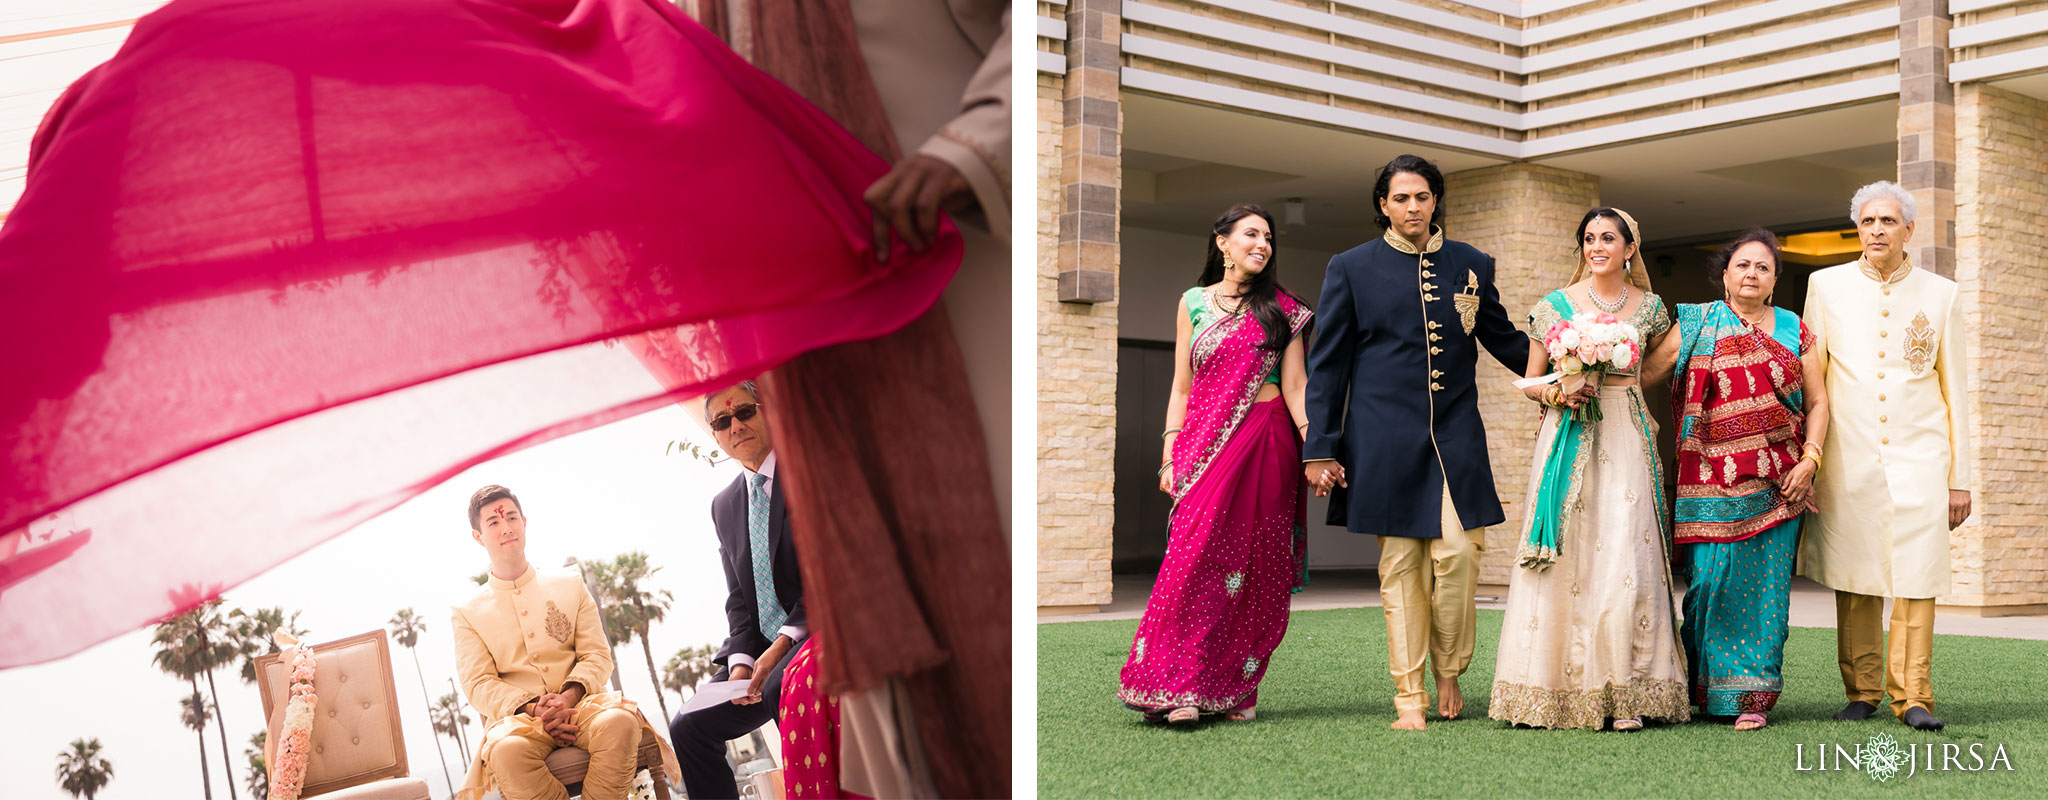 26 pasea hotel and spa huntington beach indian wedding ceremony photography